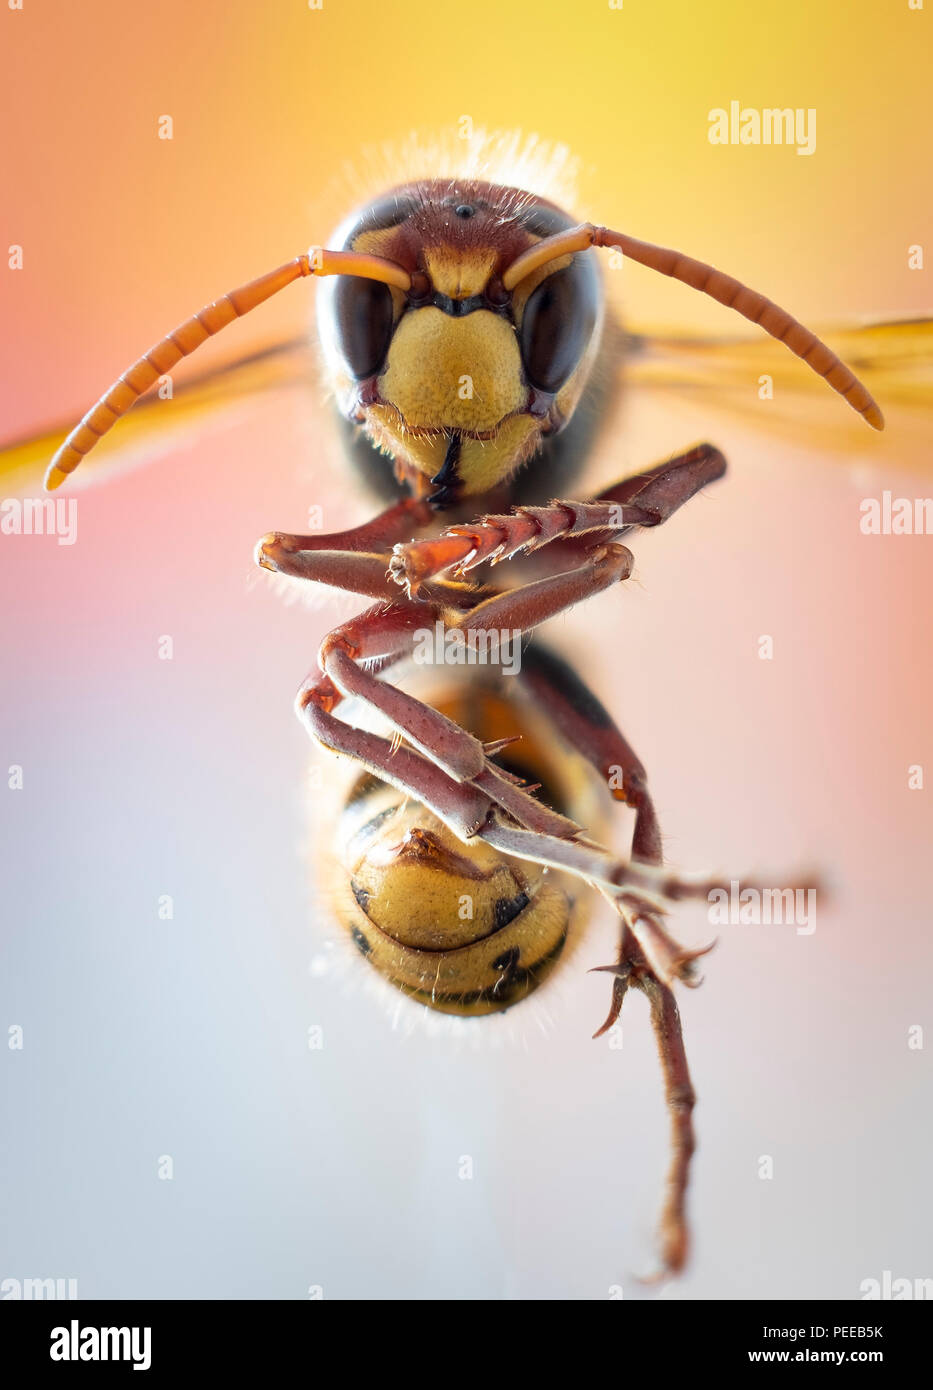 Huge European Hornet. Dangerous predatory insect. Close up Stock Photo